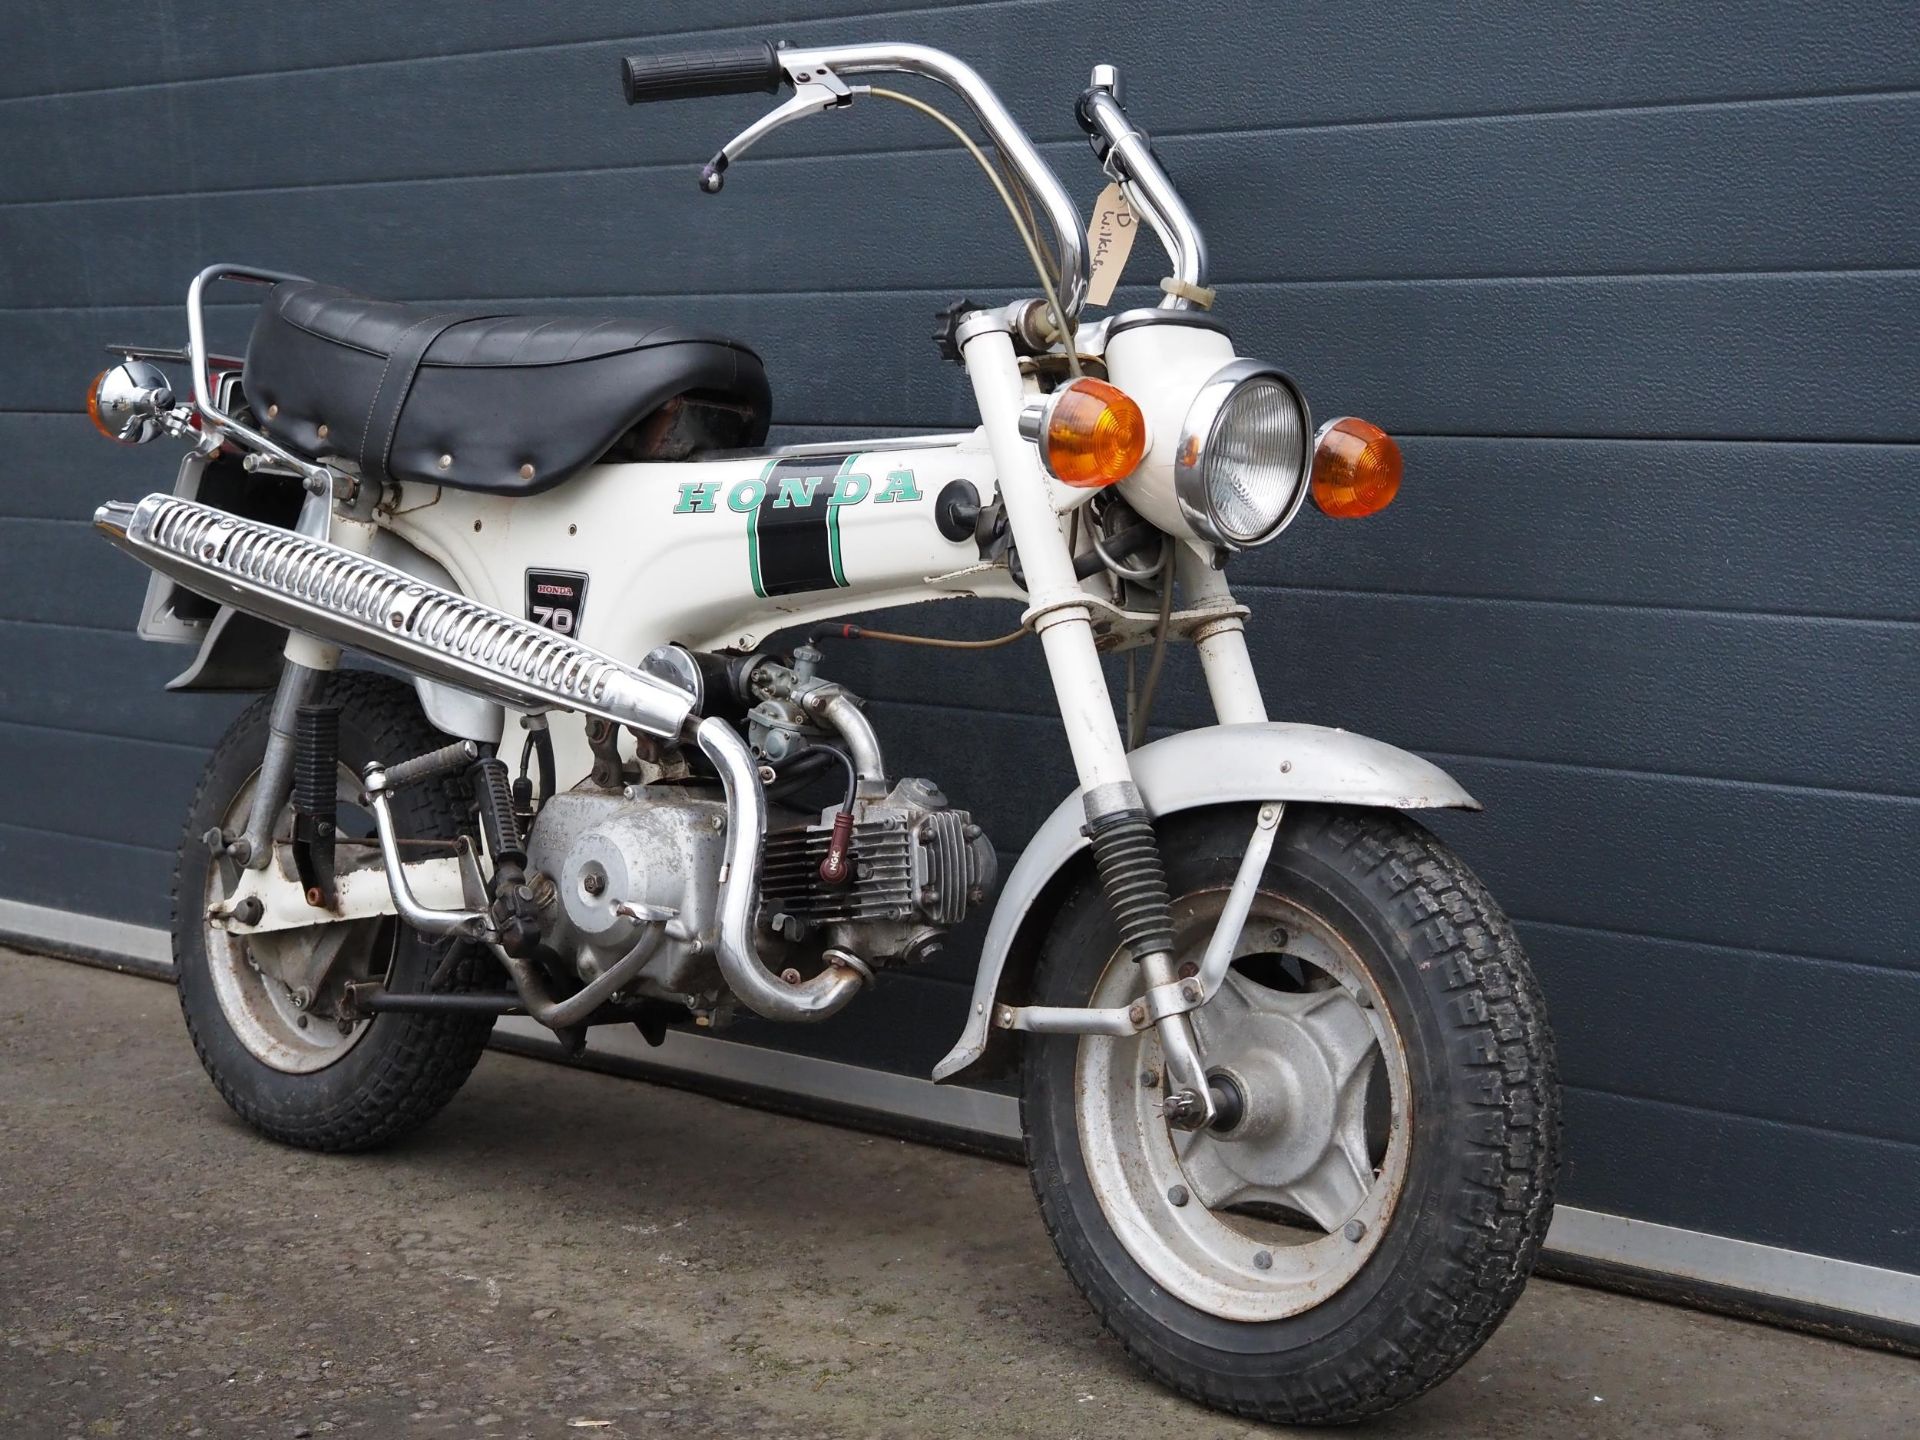 Honda ST70 motorcycle. 72cc. 1972. Frame No. 138500 Engine No. 117852 Runs and rides. Needs light - Image 2 of 6